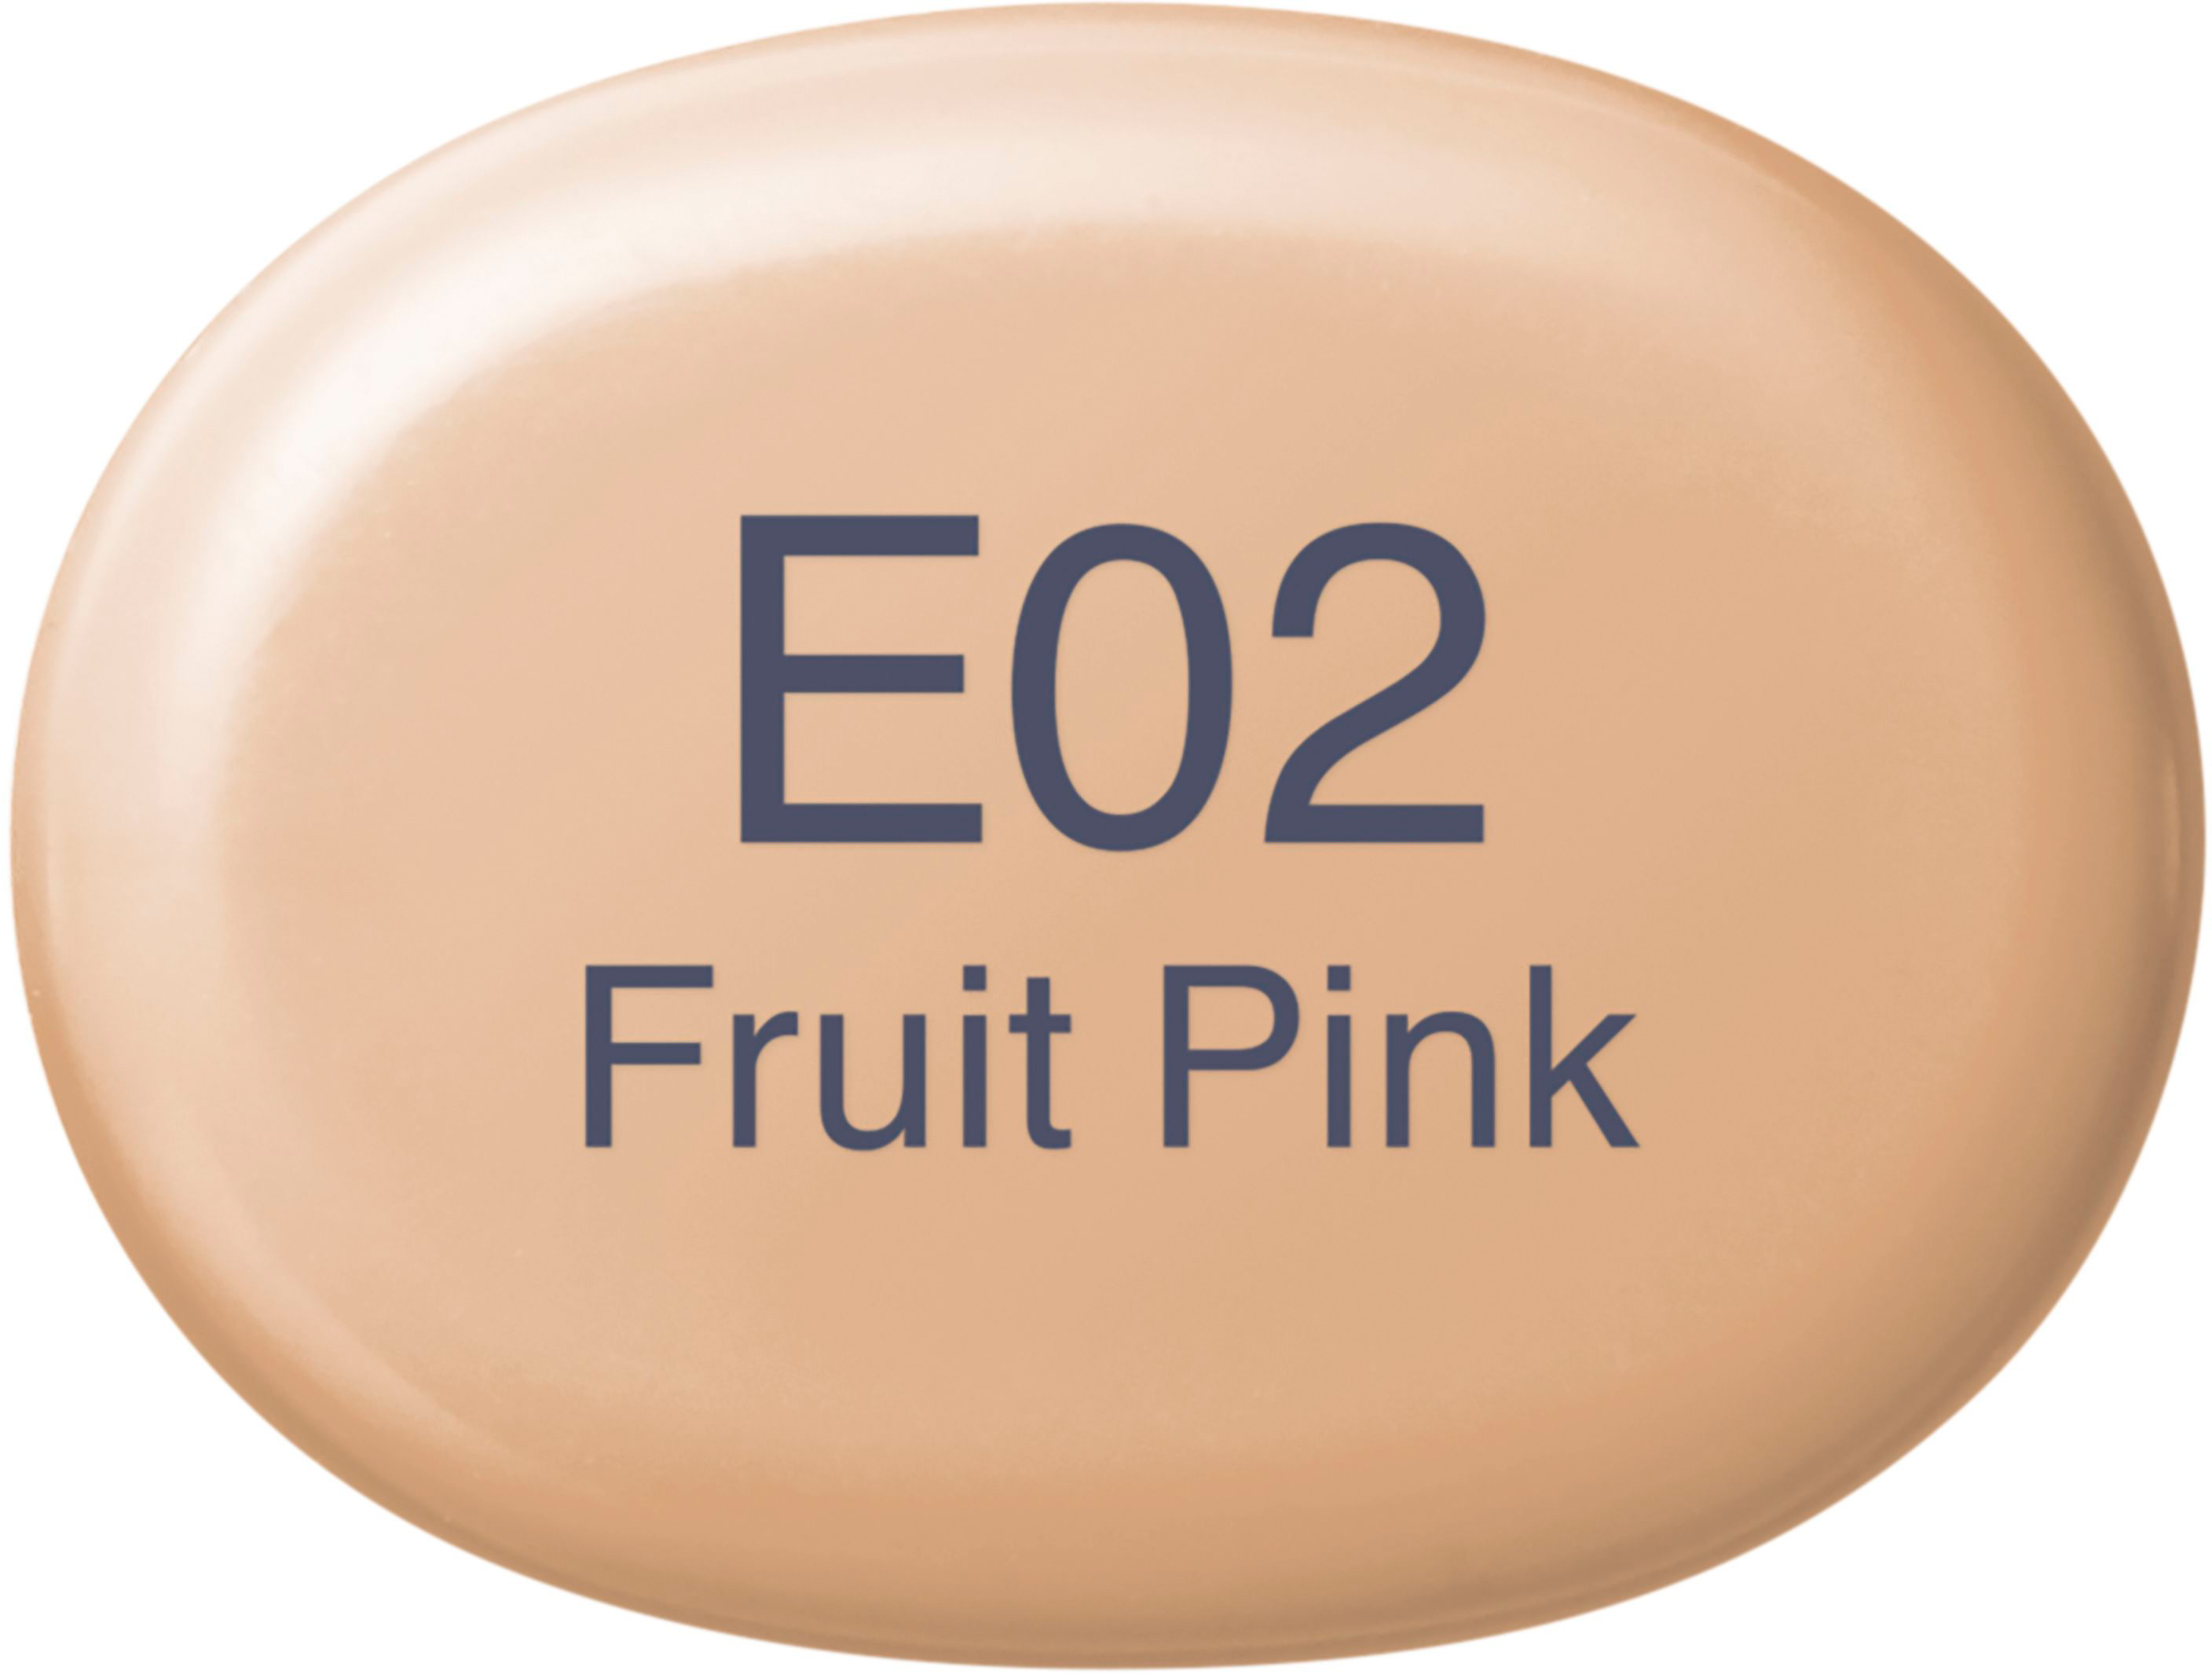 COPIC Marker Sketch 21075230 E02 - Fruit Pink